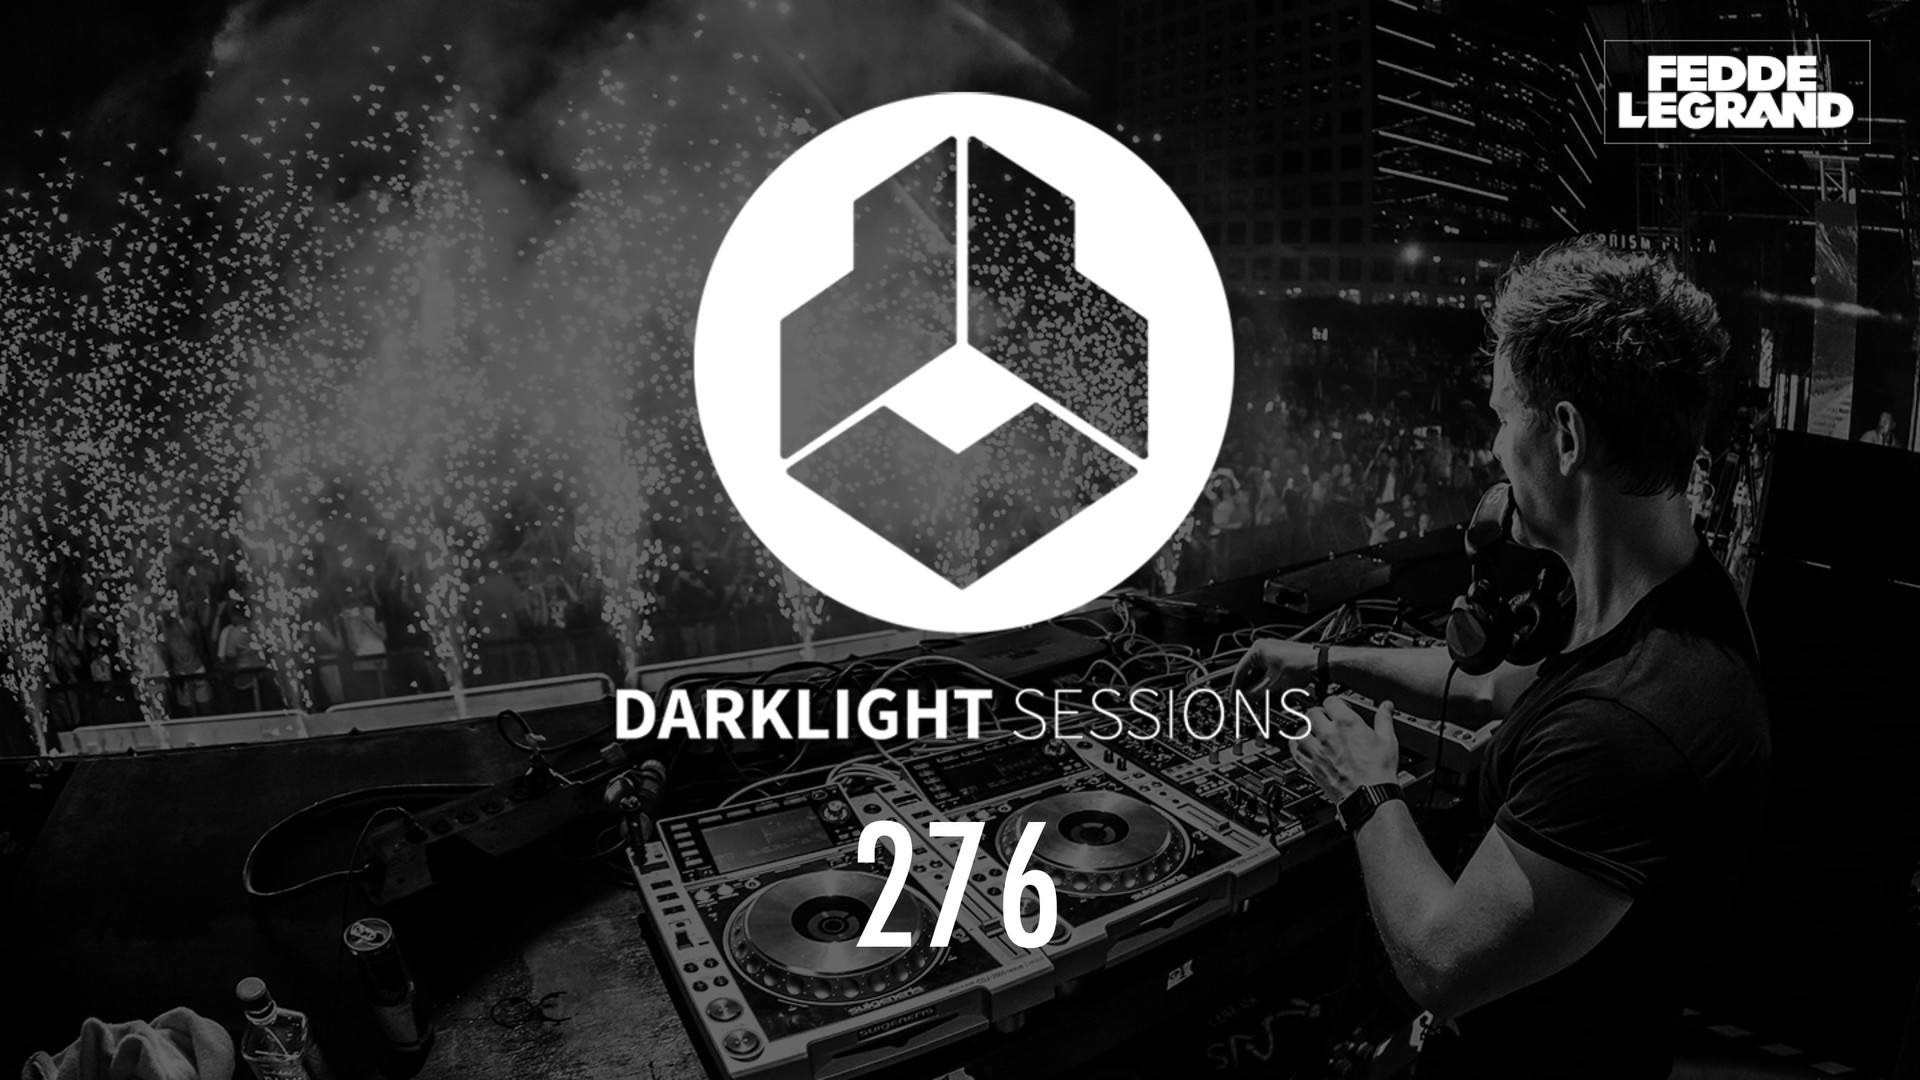 Darklight Sessions 276